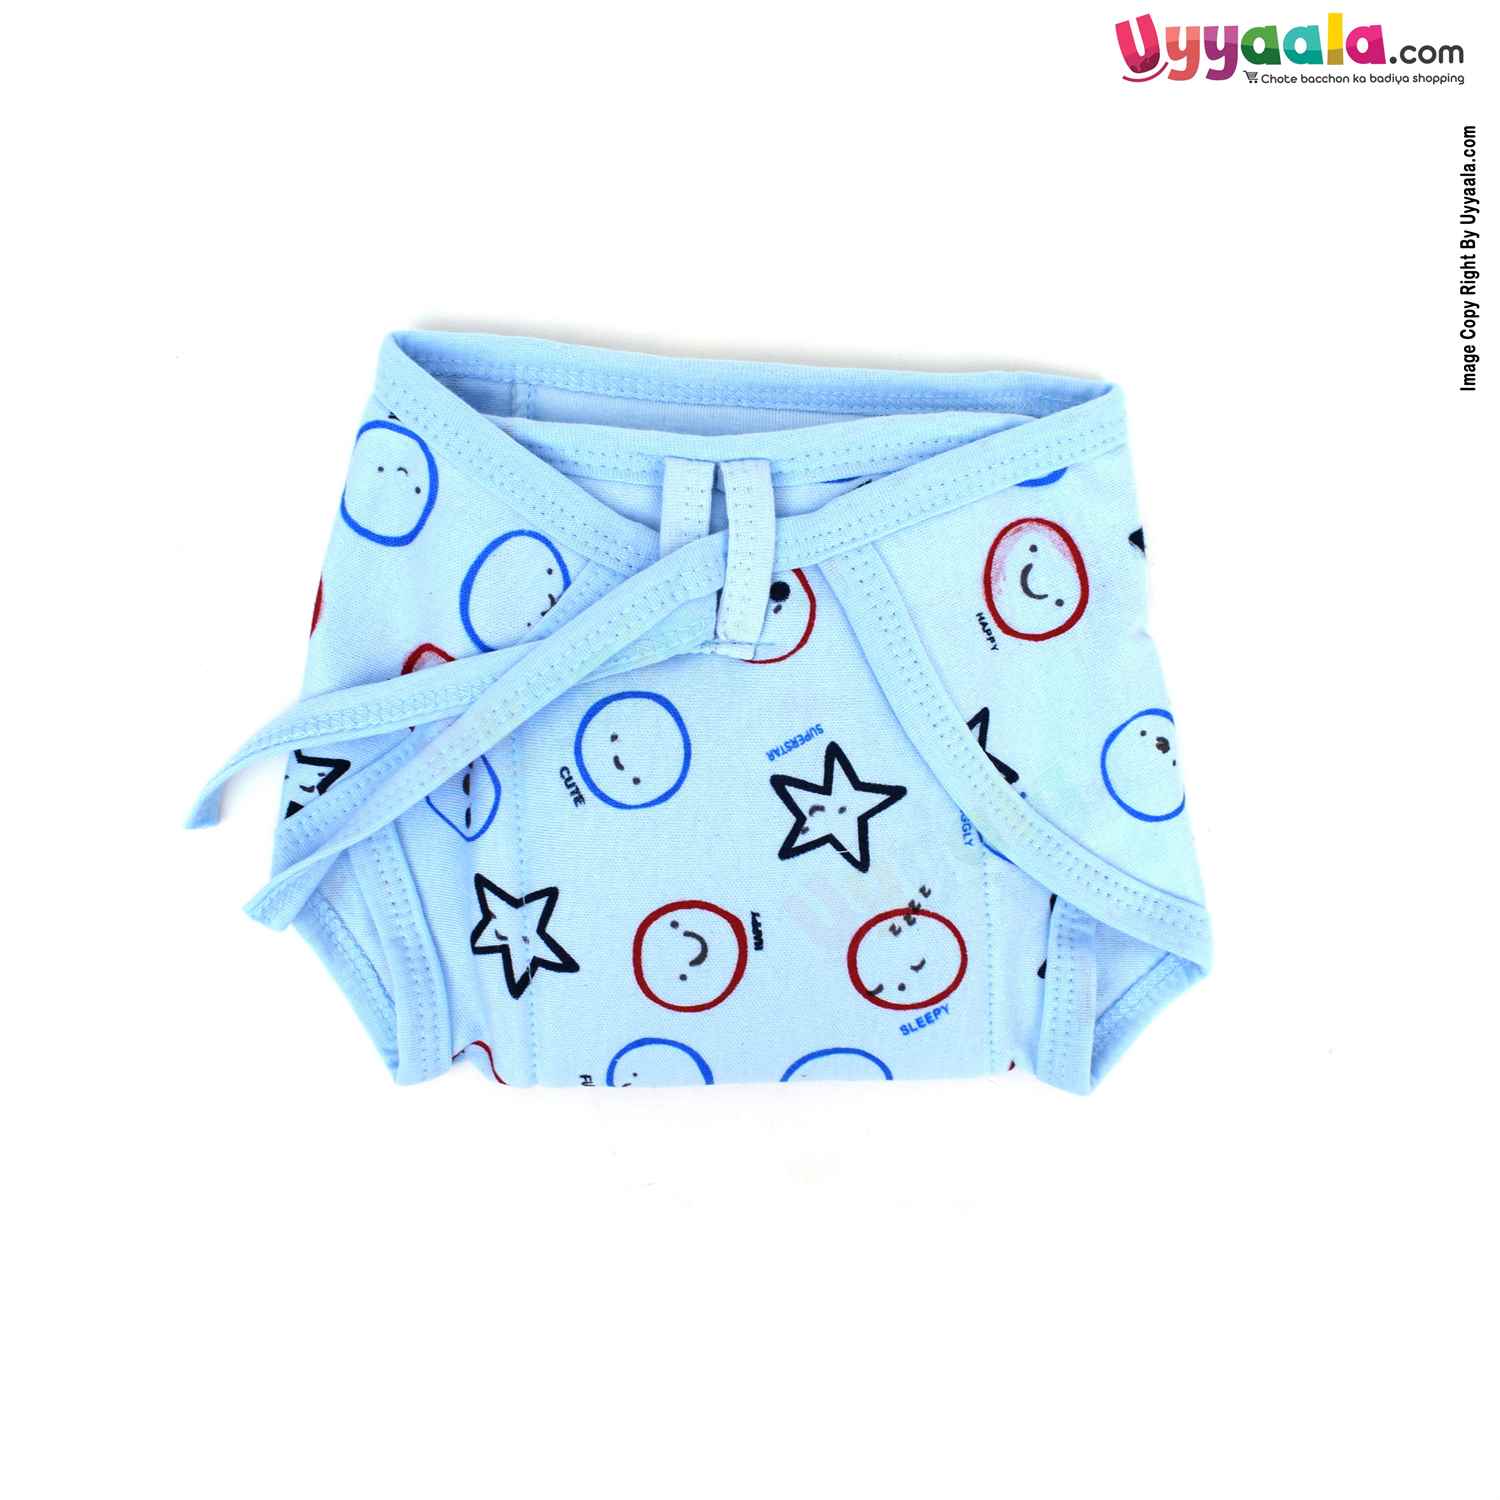 COZYCARE Washable Diapers Hosiery, Tying Mode Emoji Print Blue, Pink & Yellow- 3P Set (M)